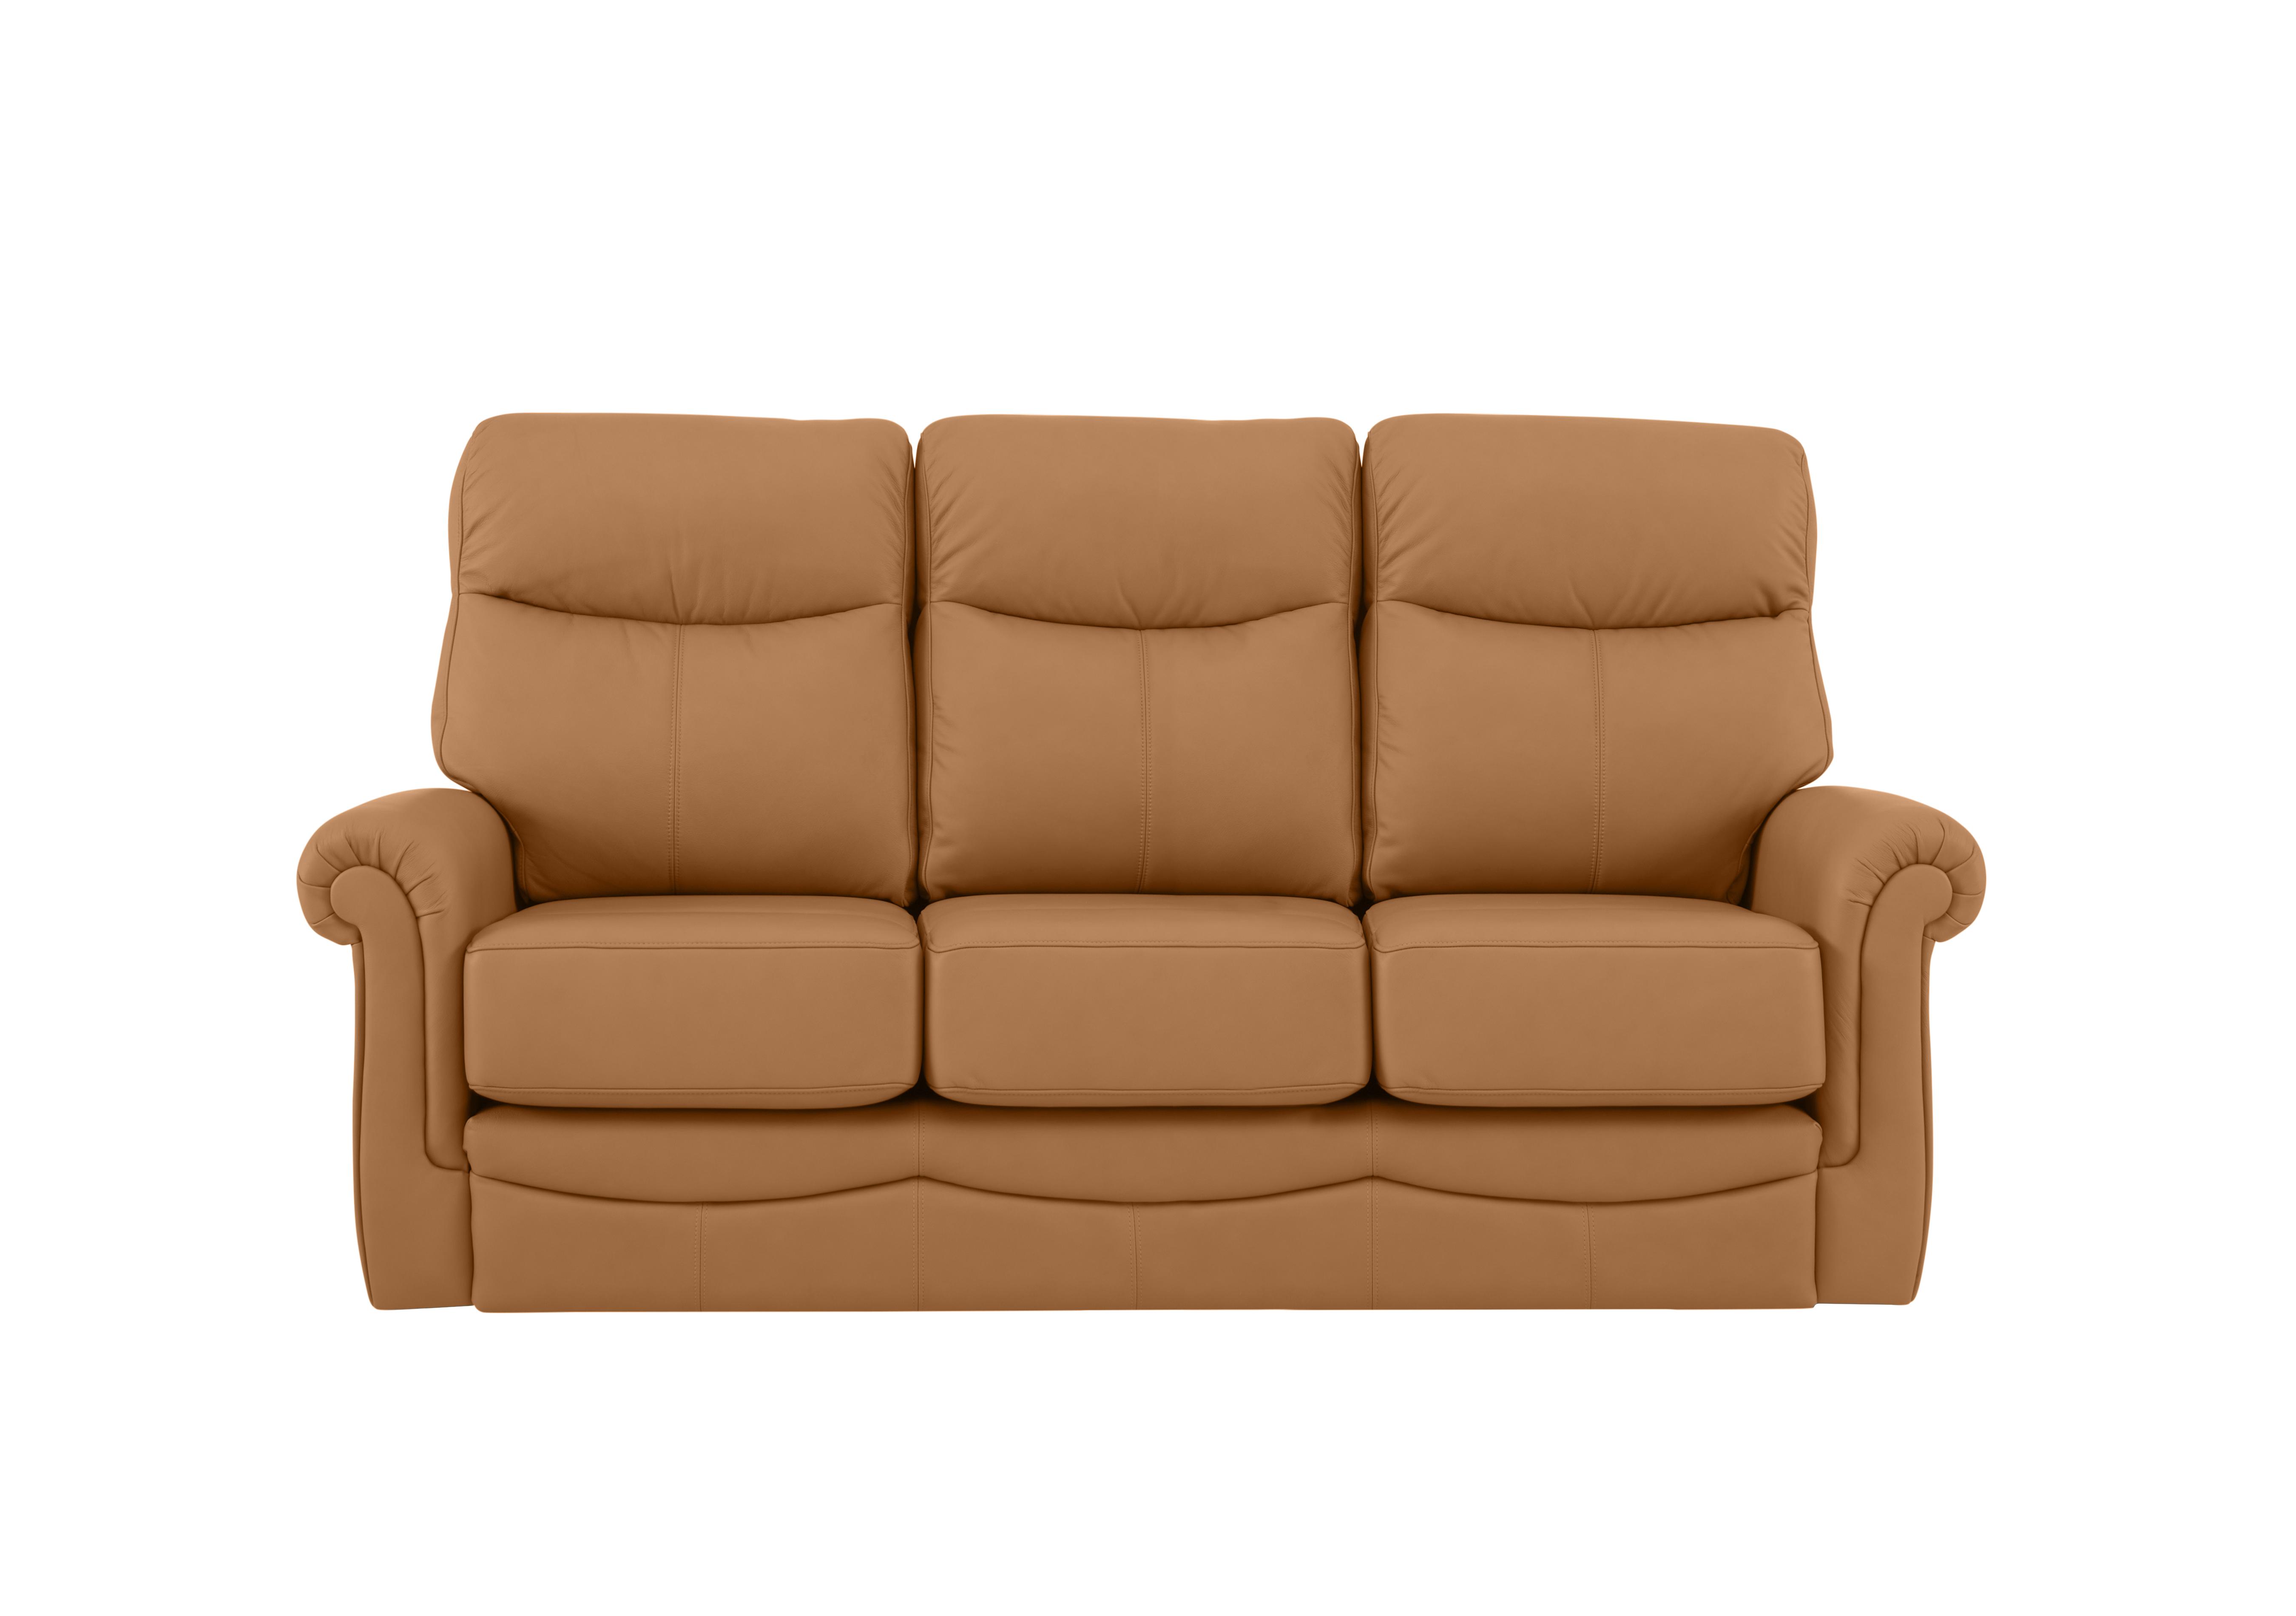 Avon Small 3 Seater Leather Sofa in L847 Cambridge Tan on Furniture Village